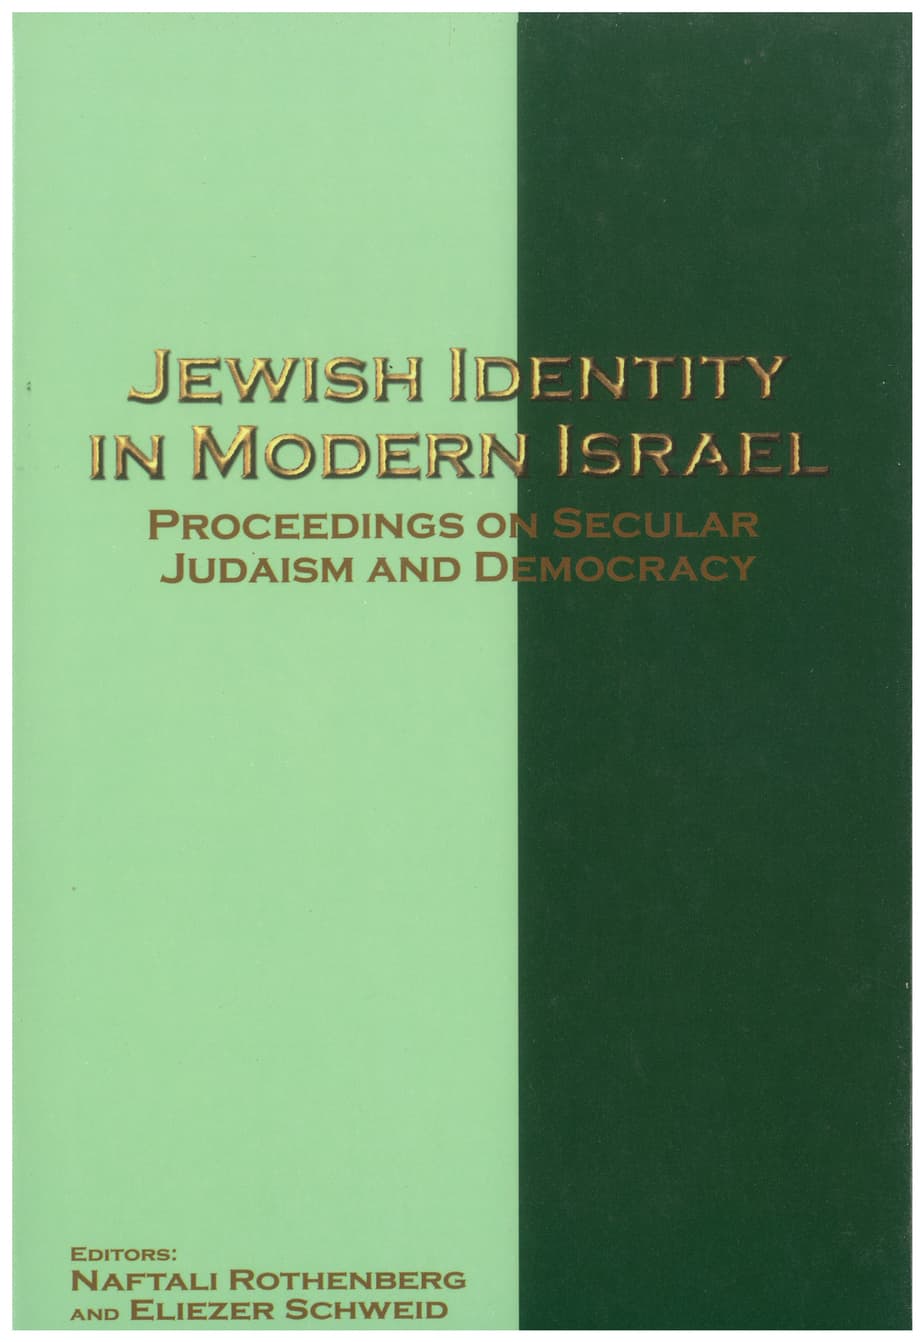 Jewish Identity in Modern Israel